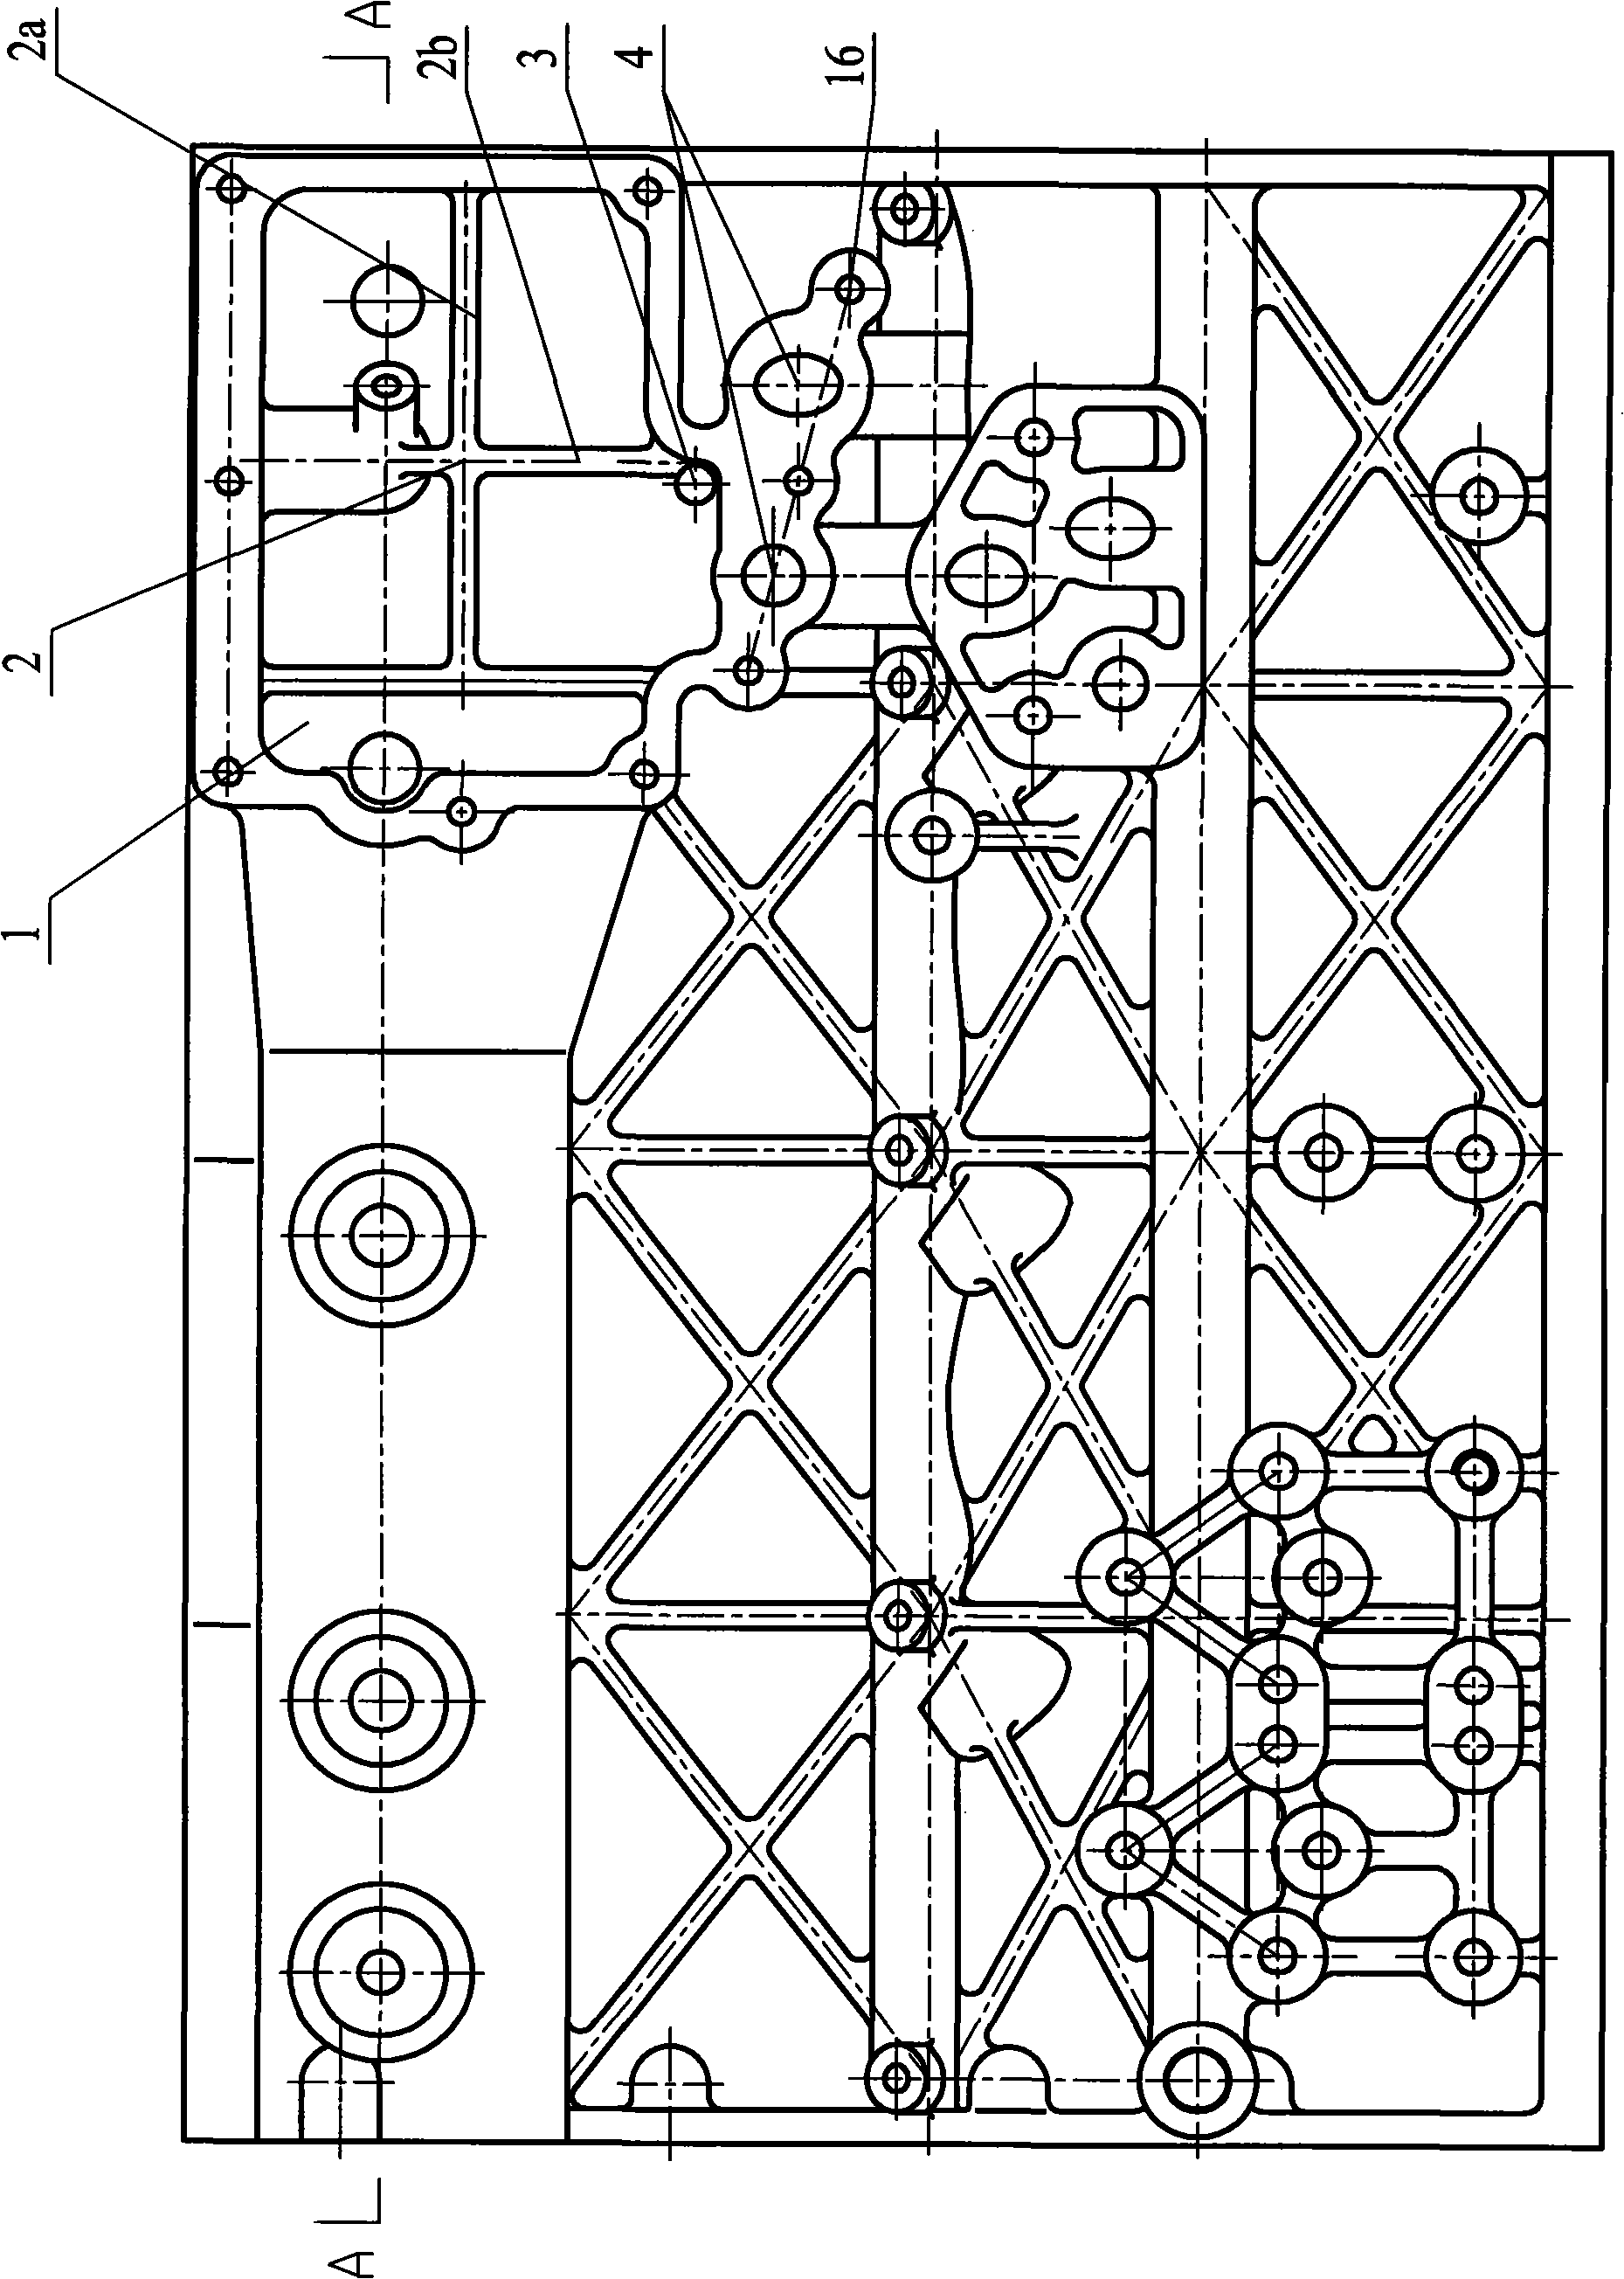 Water jacket structure of diesel cylinder block